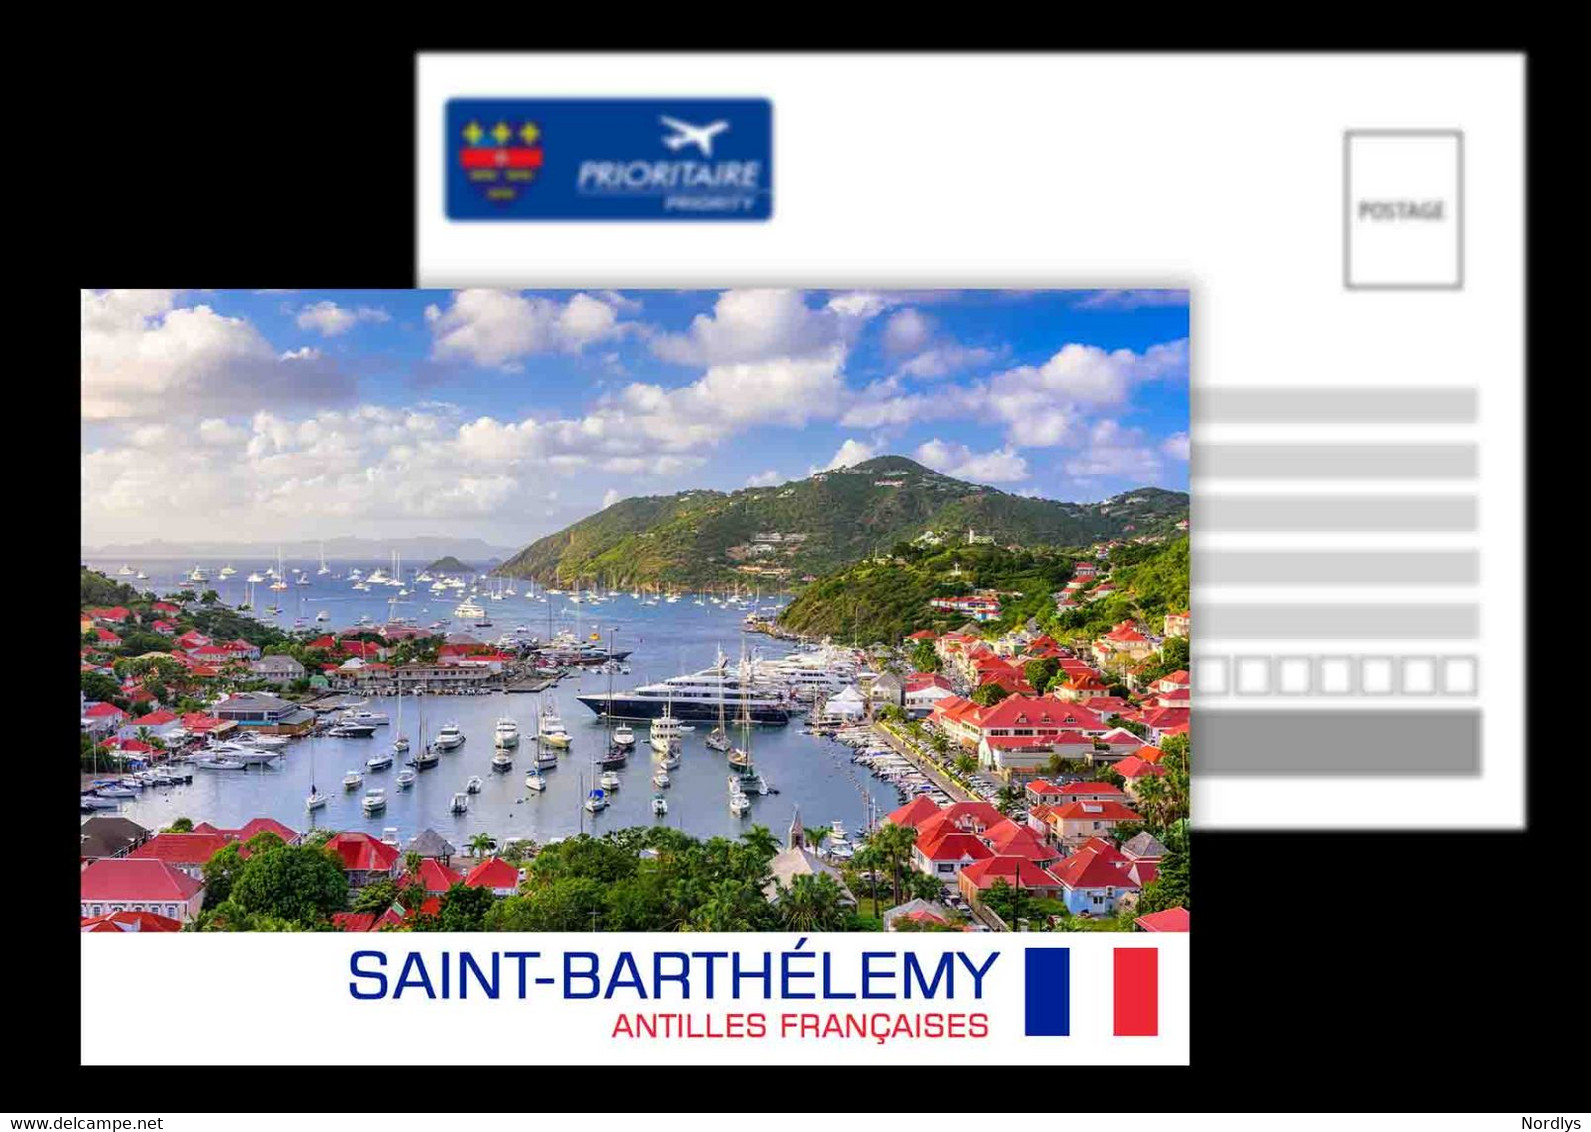 Saint Barthelemy / Postcard /View Card - Saint Barthelemy